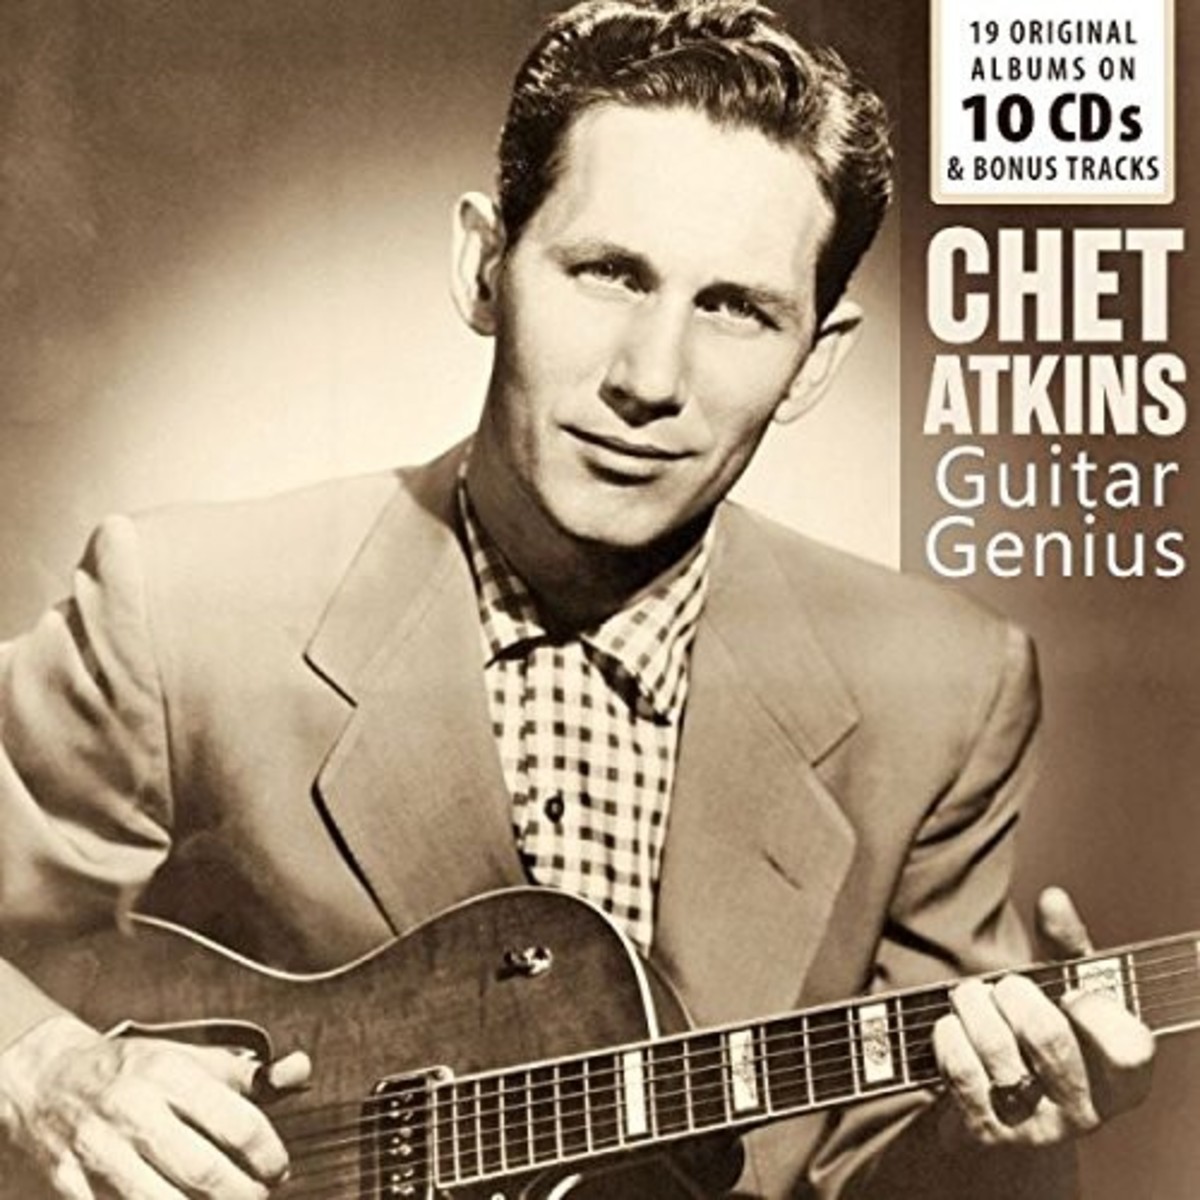 Chet Atkins